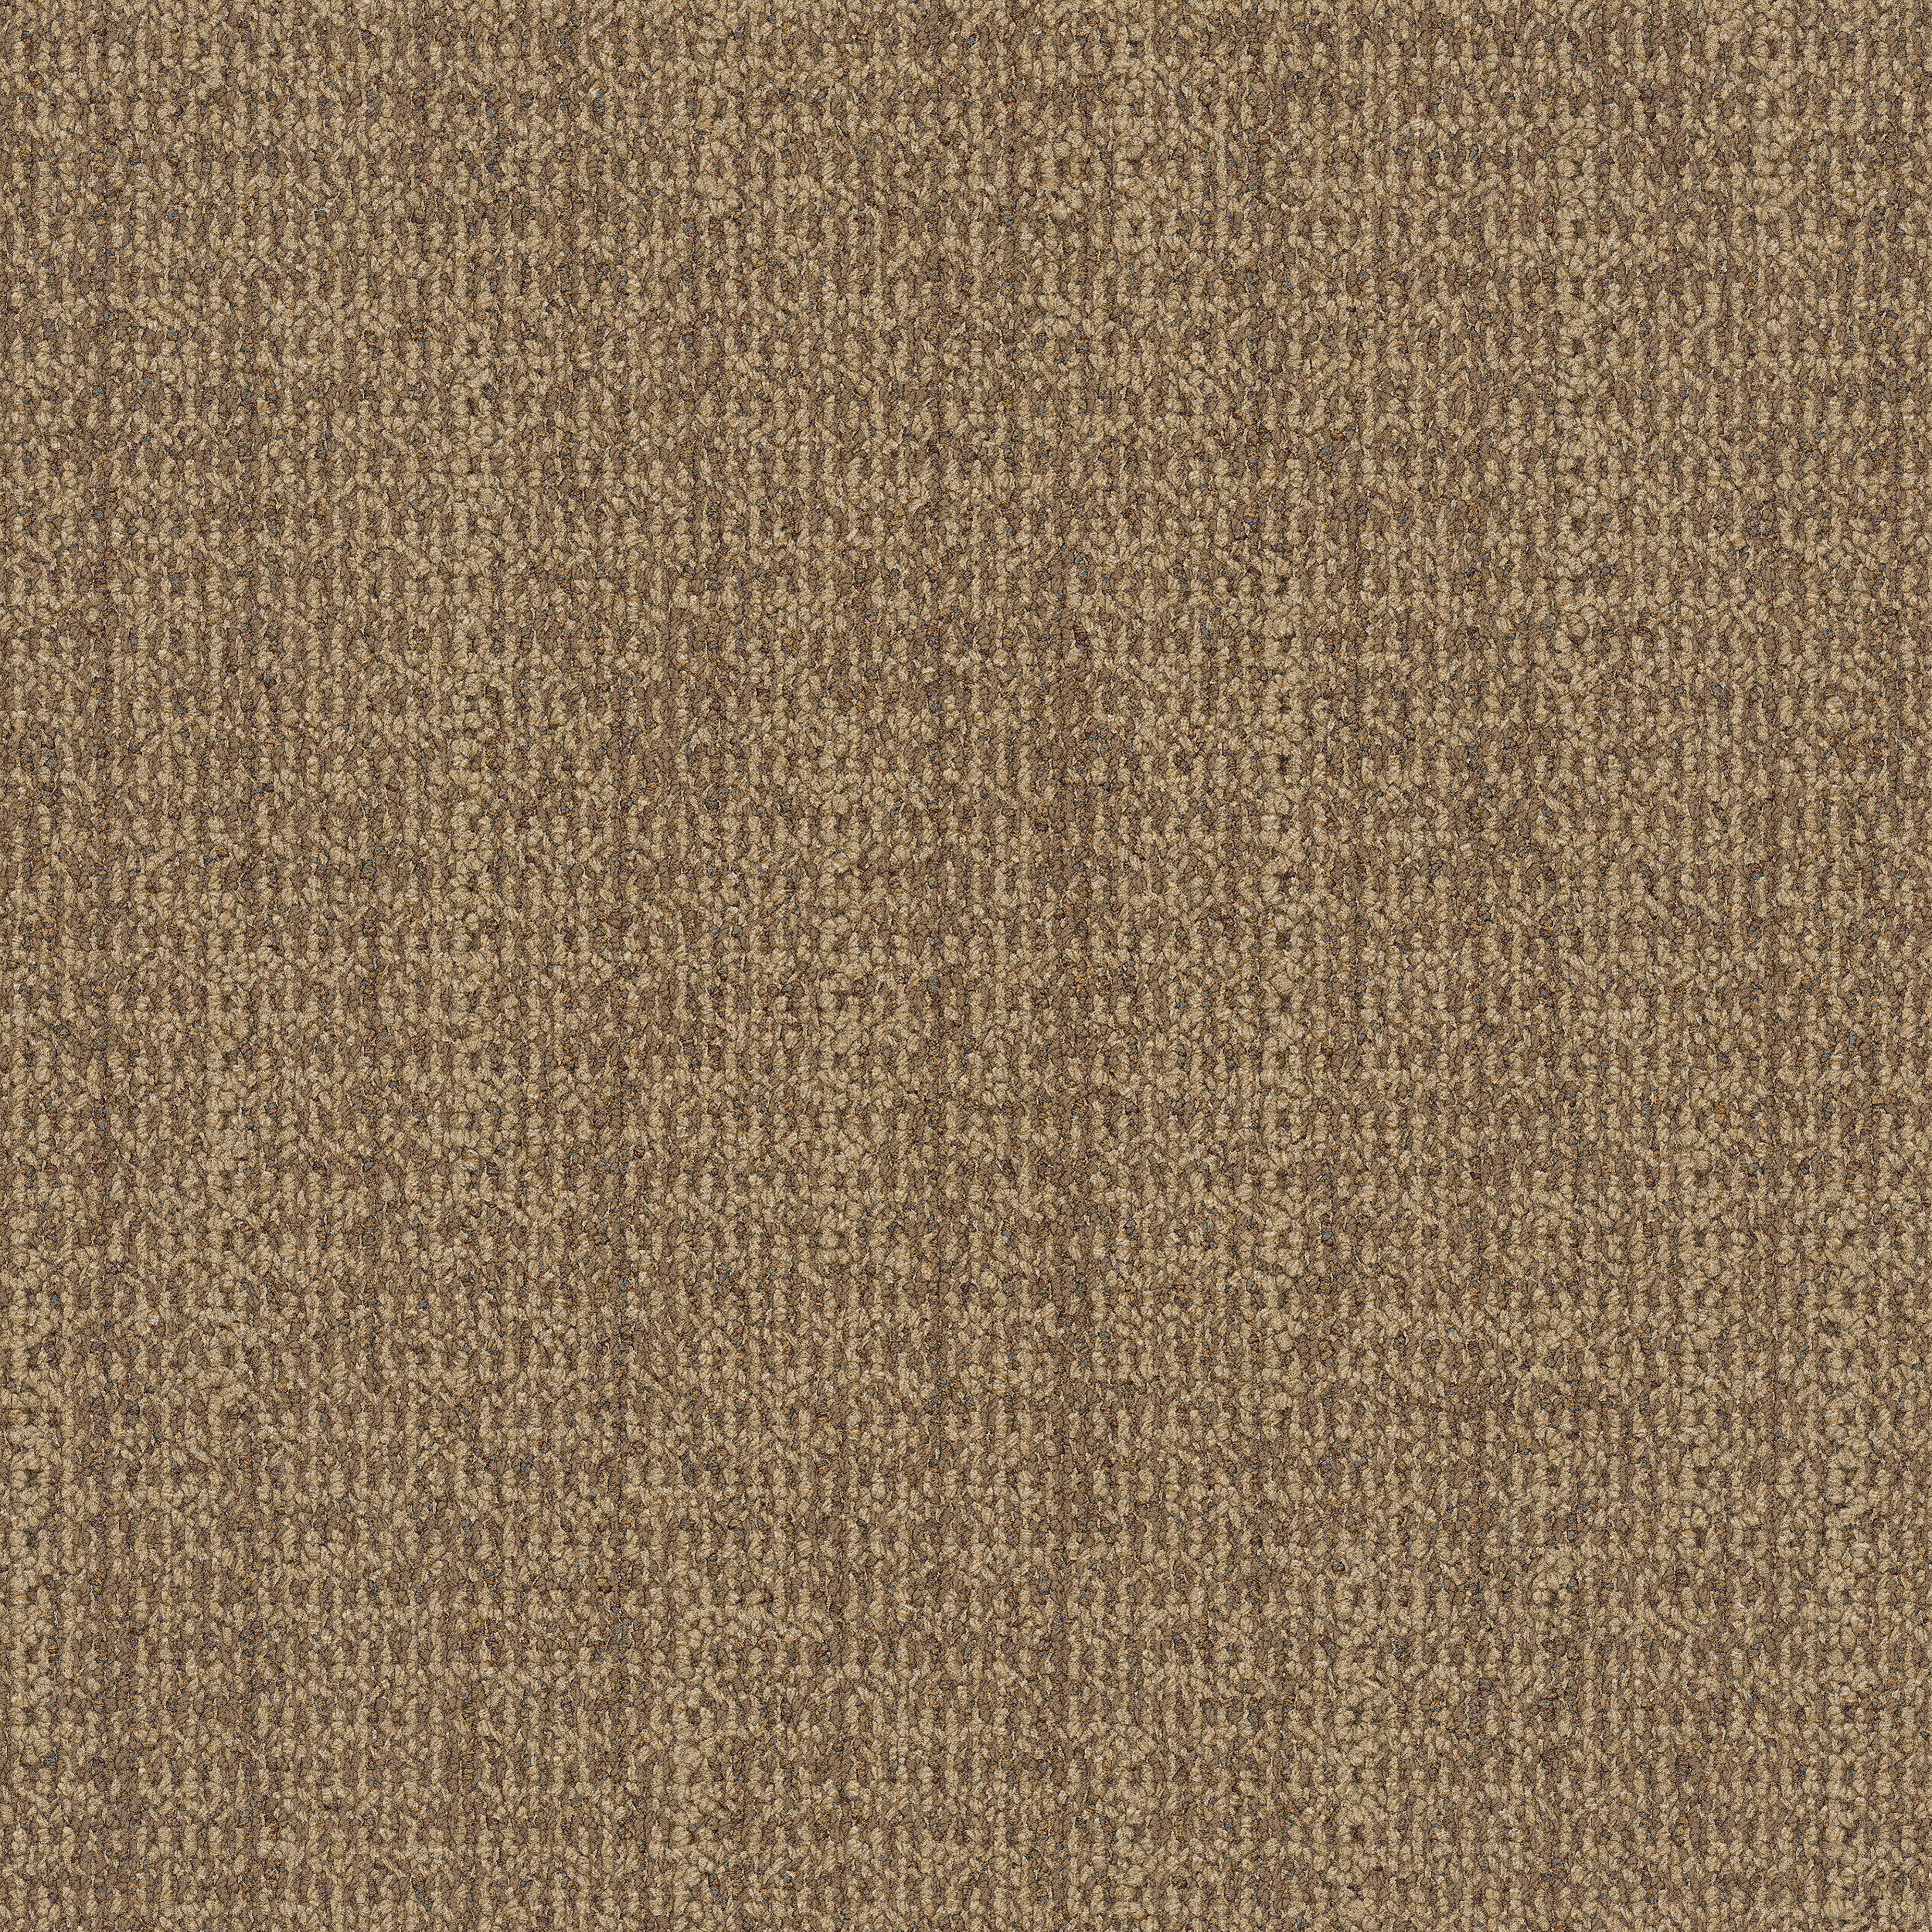 WG100 Carpet Tile in Amber imagen número 12